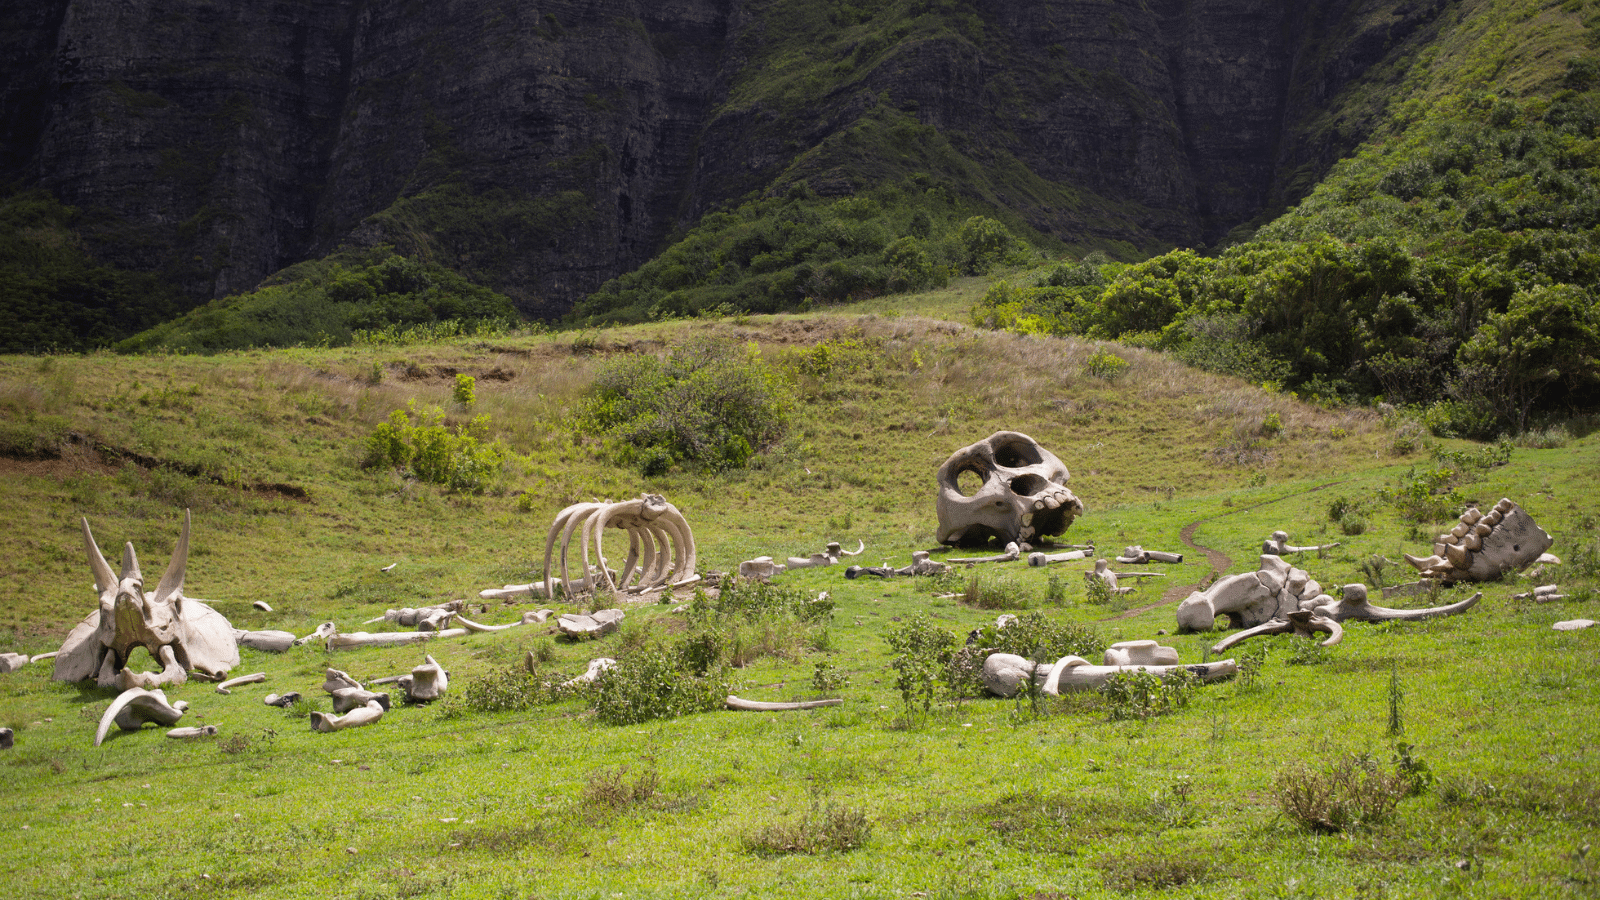 Grassy hill with bones